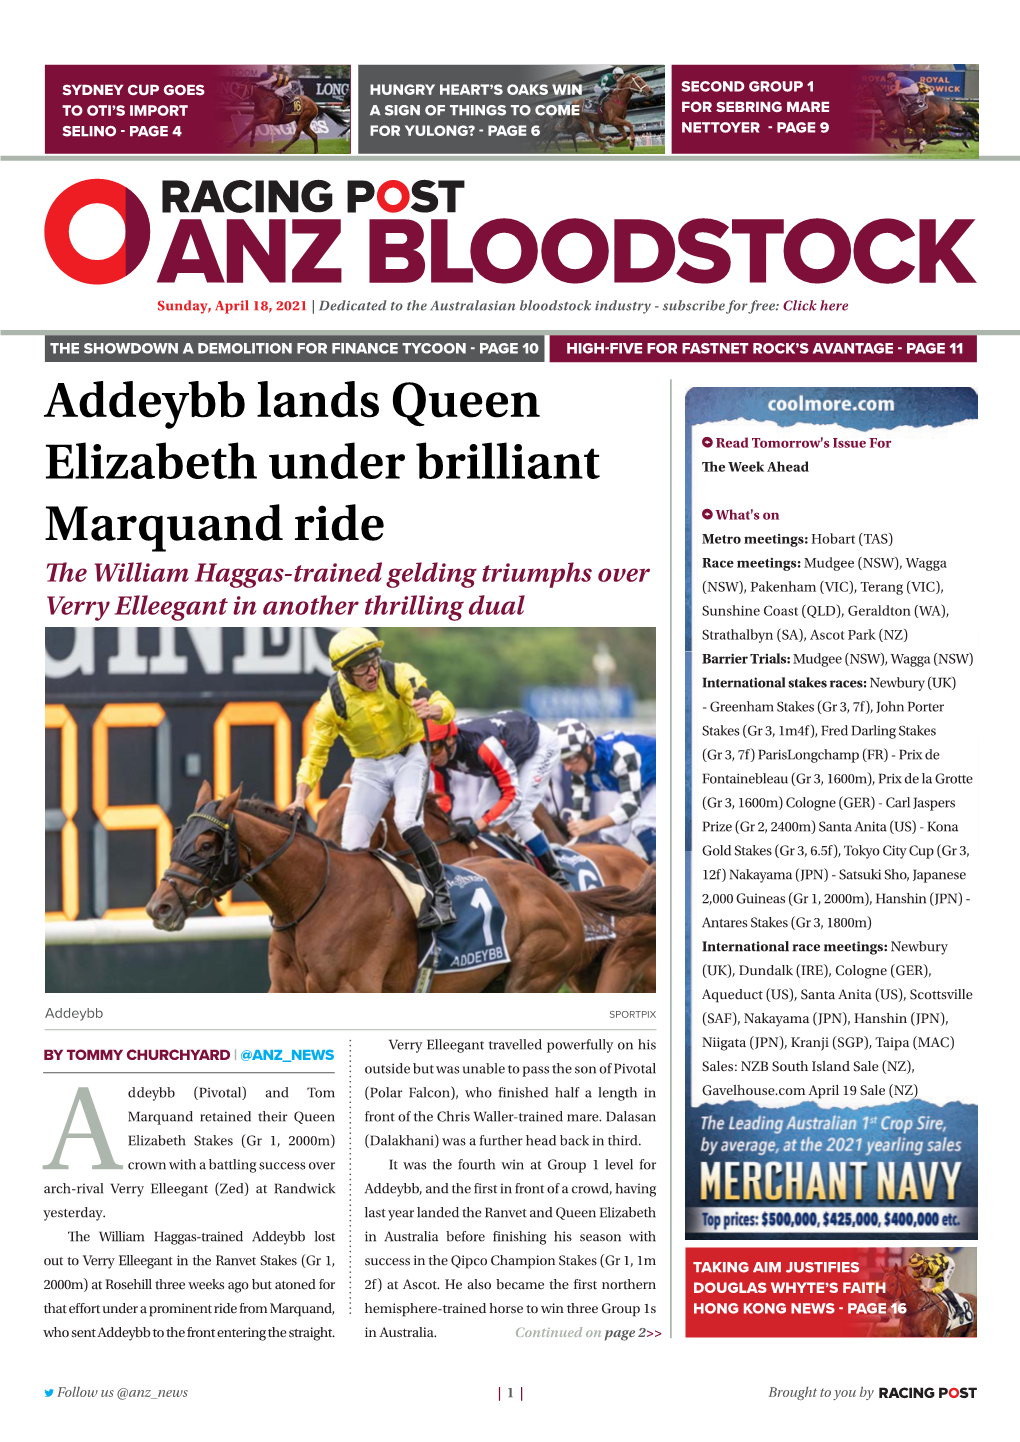 Addeybb Lands Queen Elizabeth Under Brilliant Marquand Ride | 2 | Sunday, April 18, 2021